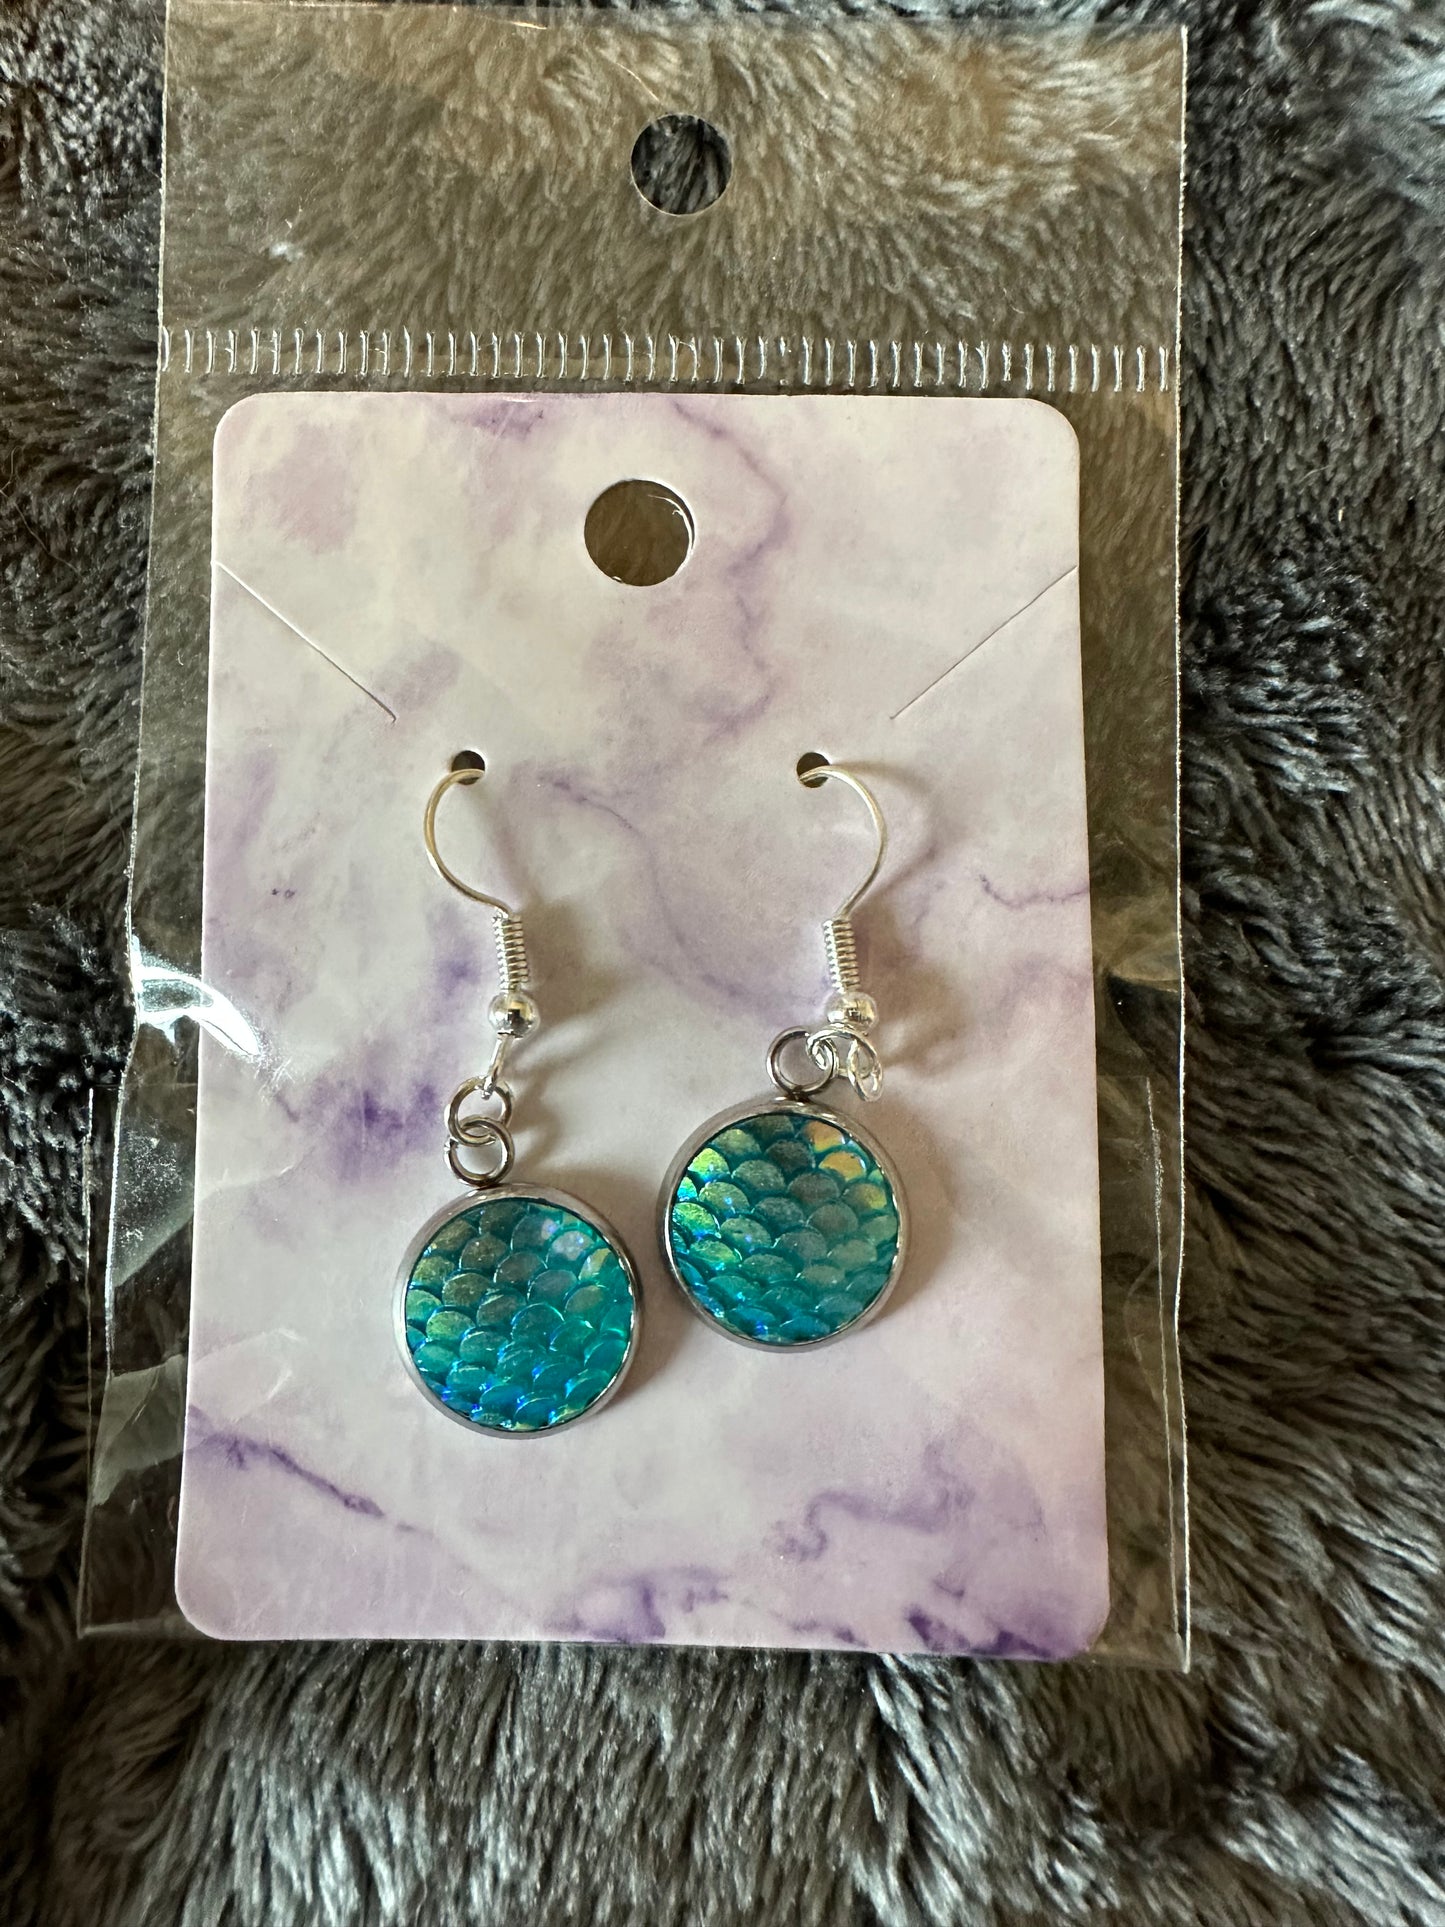 Blue mermaid scale earring